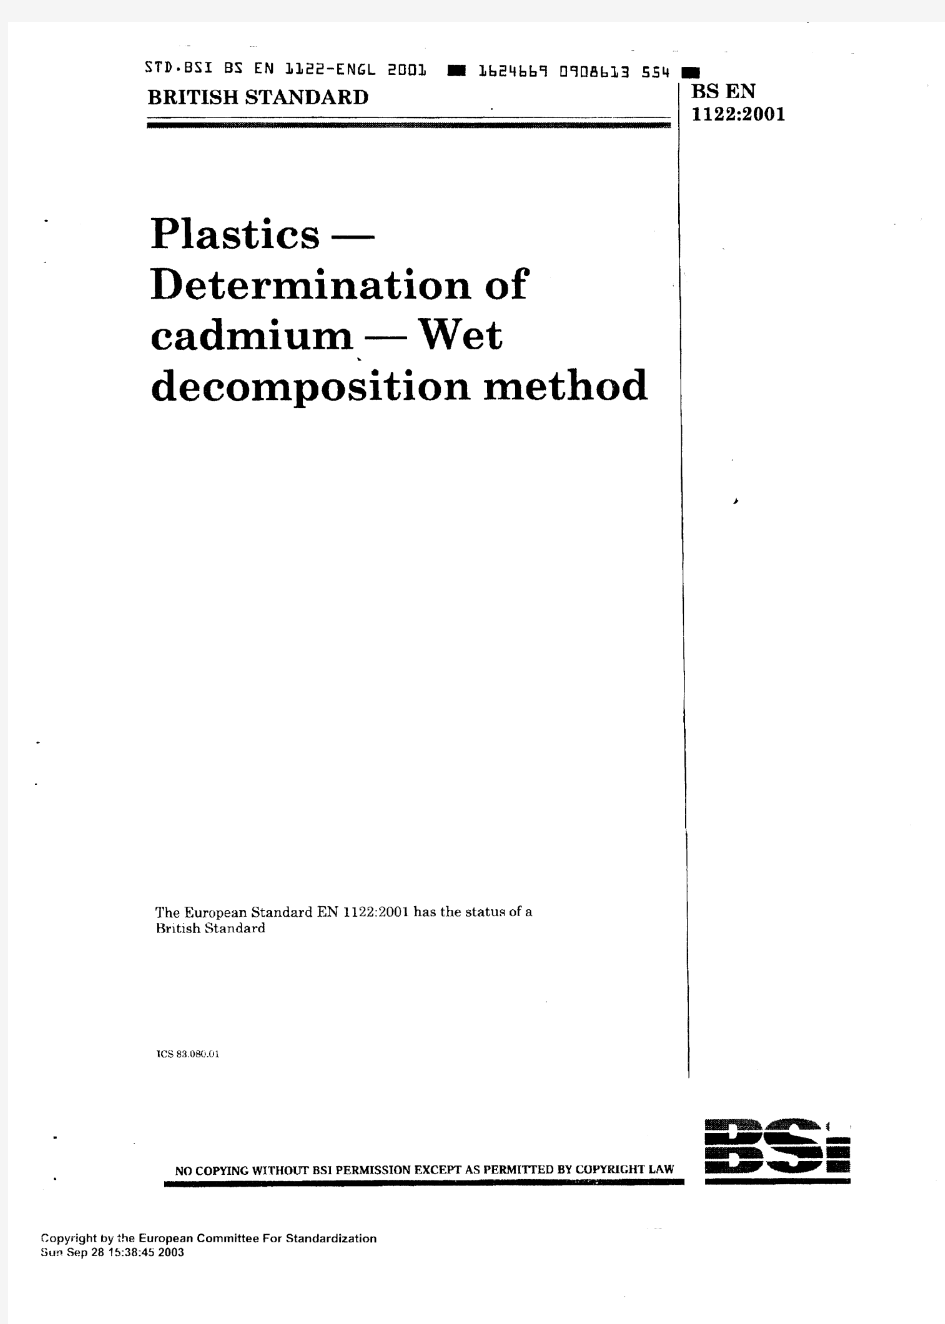 BS EN 1122-2001 塑料.镉的测定.湿分解法 (Plastics - Determination of cadmium - Wet decomposition meth